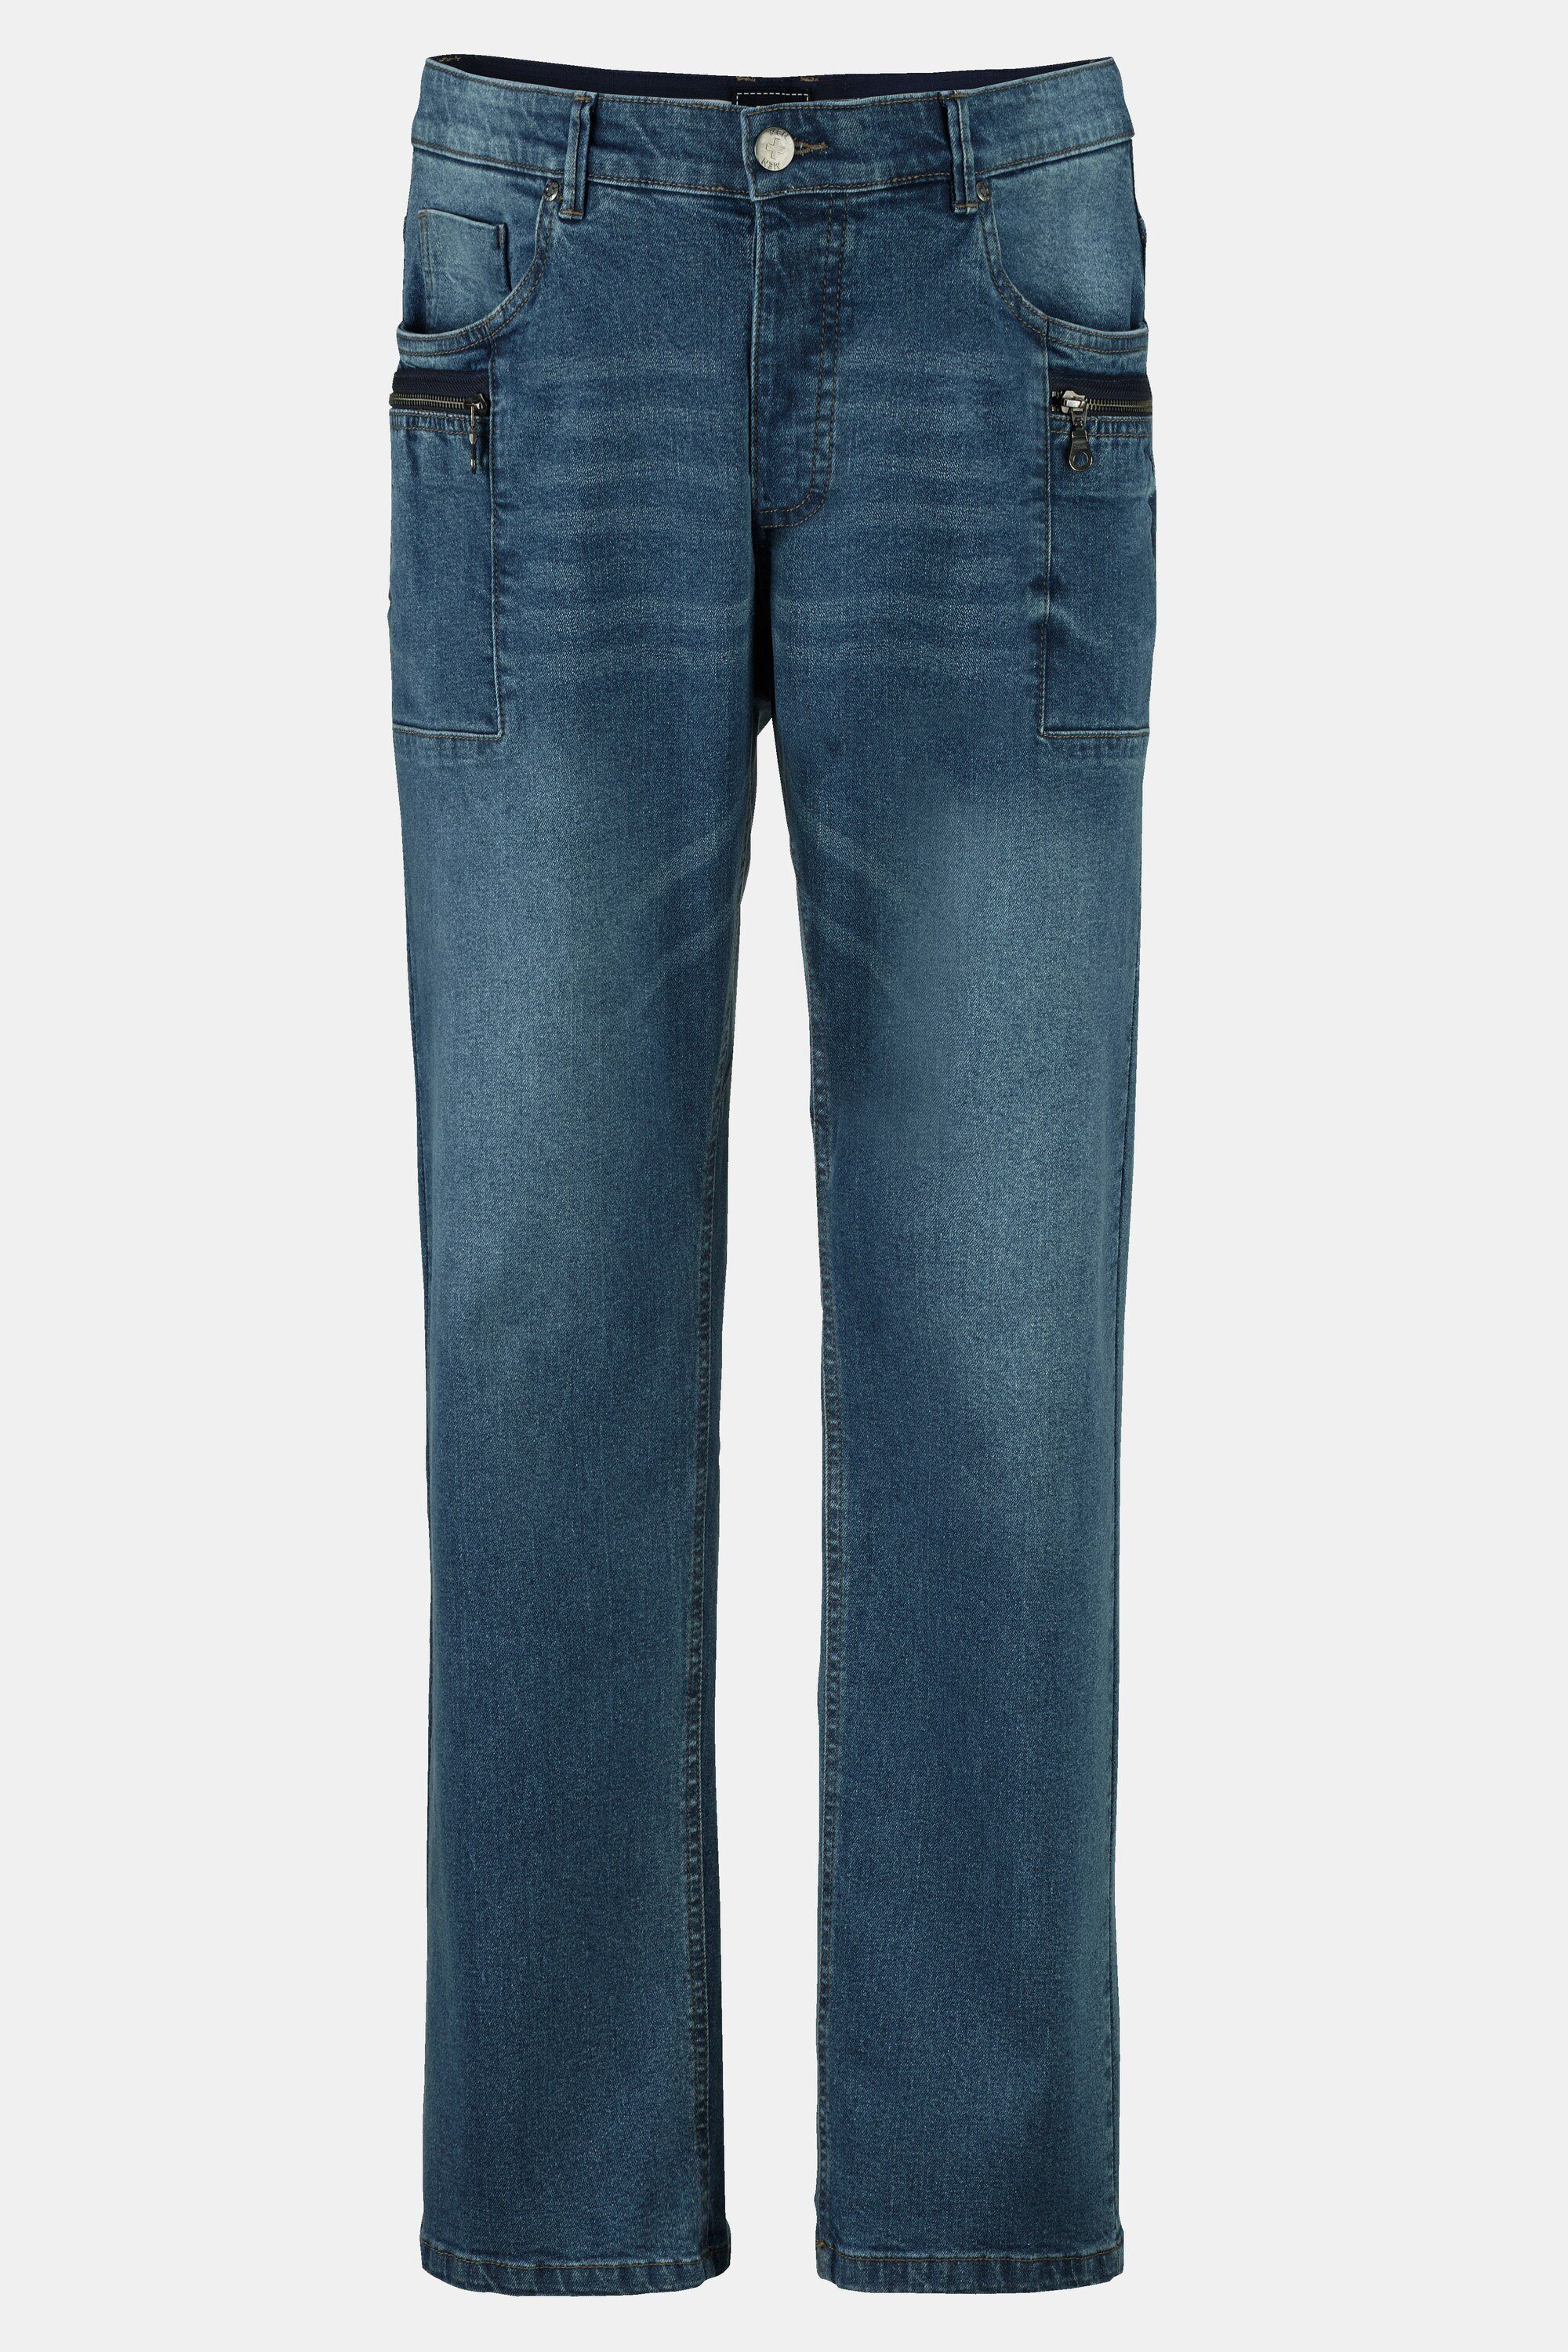 Spezialschnitt Plus hellblau Jeans 5-Pocket-Jeans Men